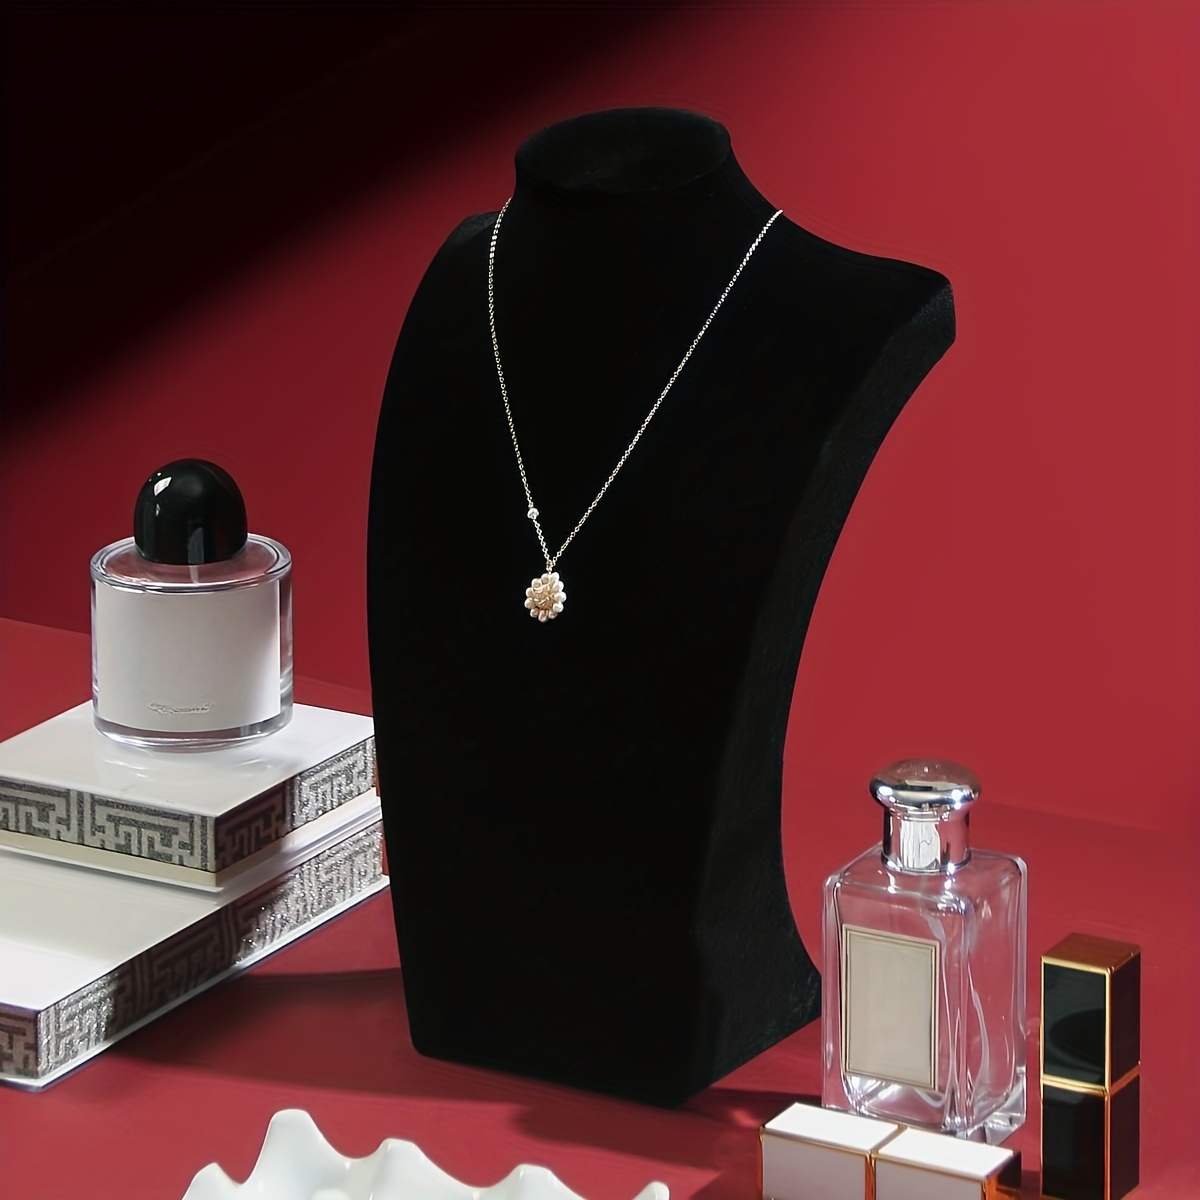 

1pc Black Velvet Portrait Mannequin Display Stand Premium Velvet Necklace Holder Jewelry Stand Portrait Pendant Display Stand Jewelry Jewelry Photography Props